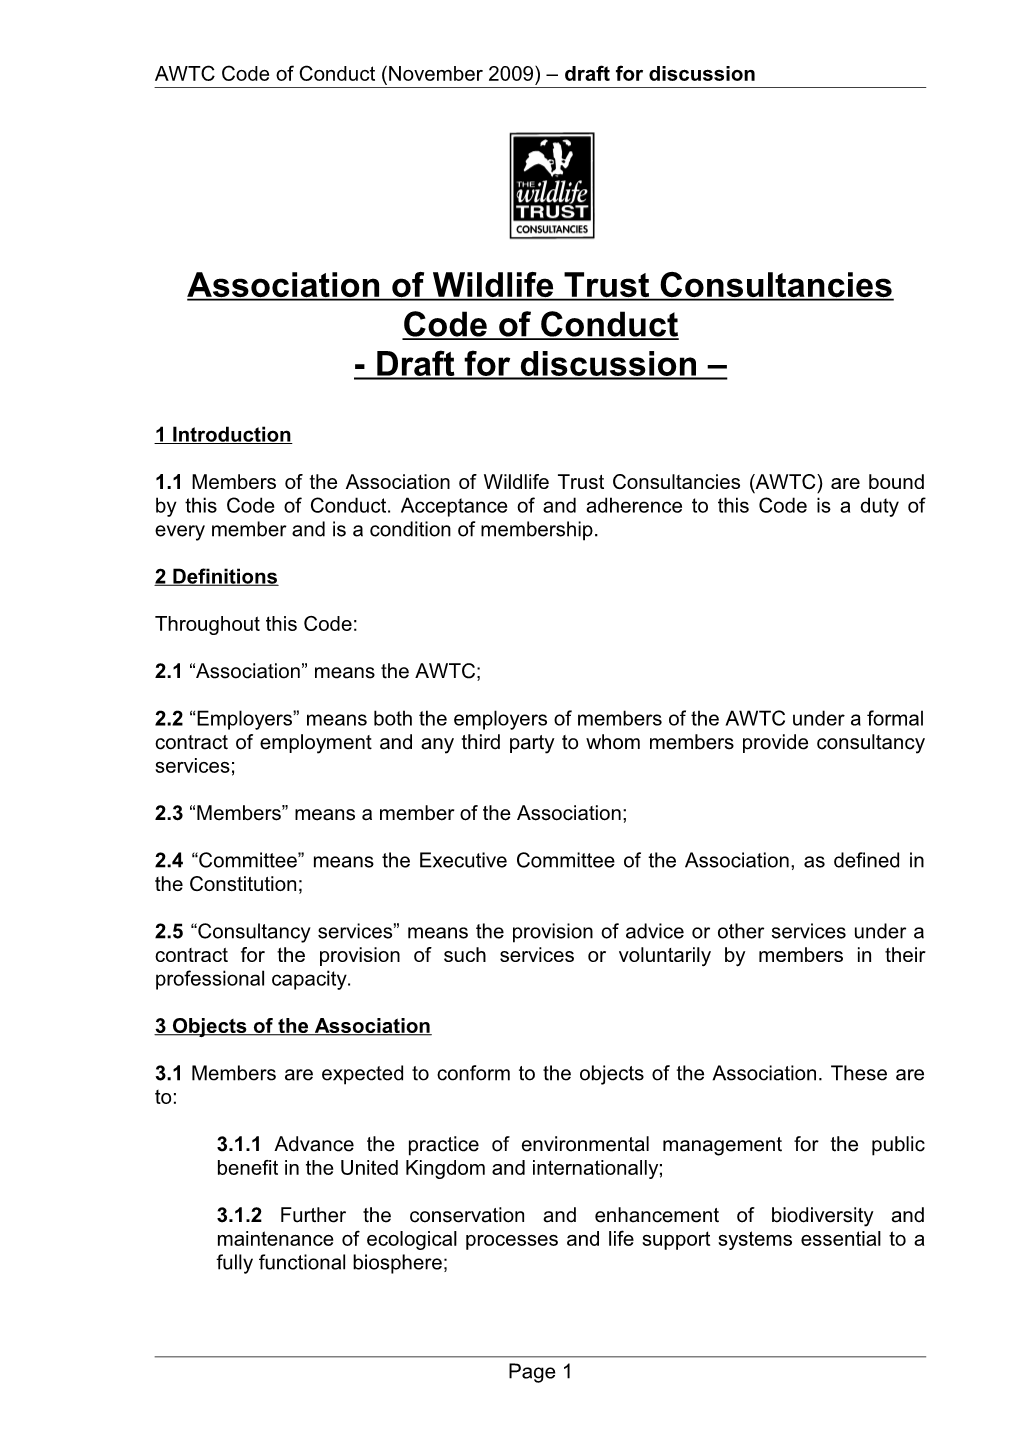 Association of Wildlife Trust Consultancies